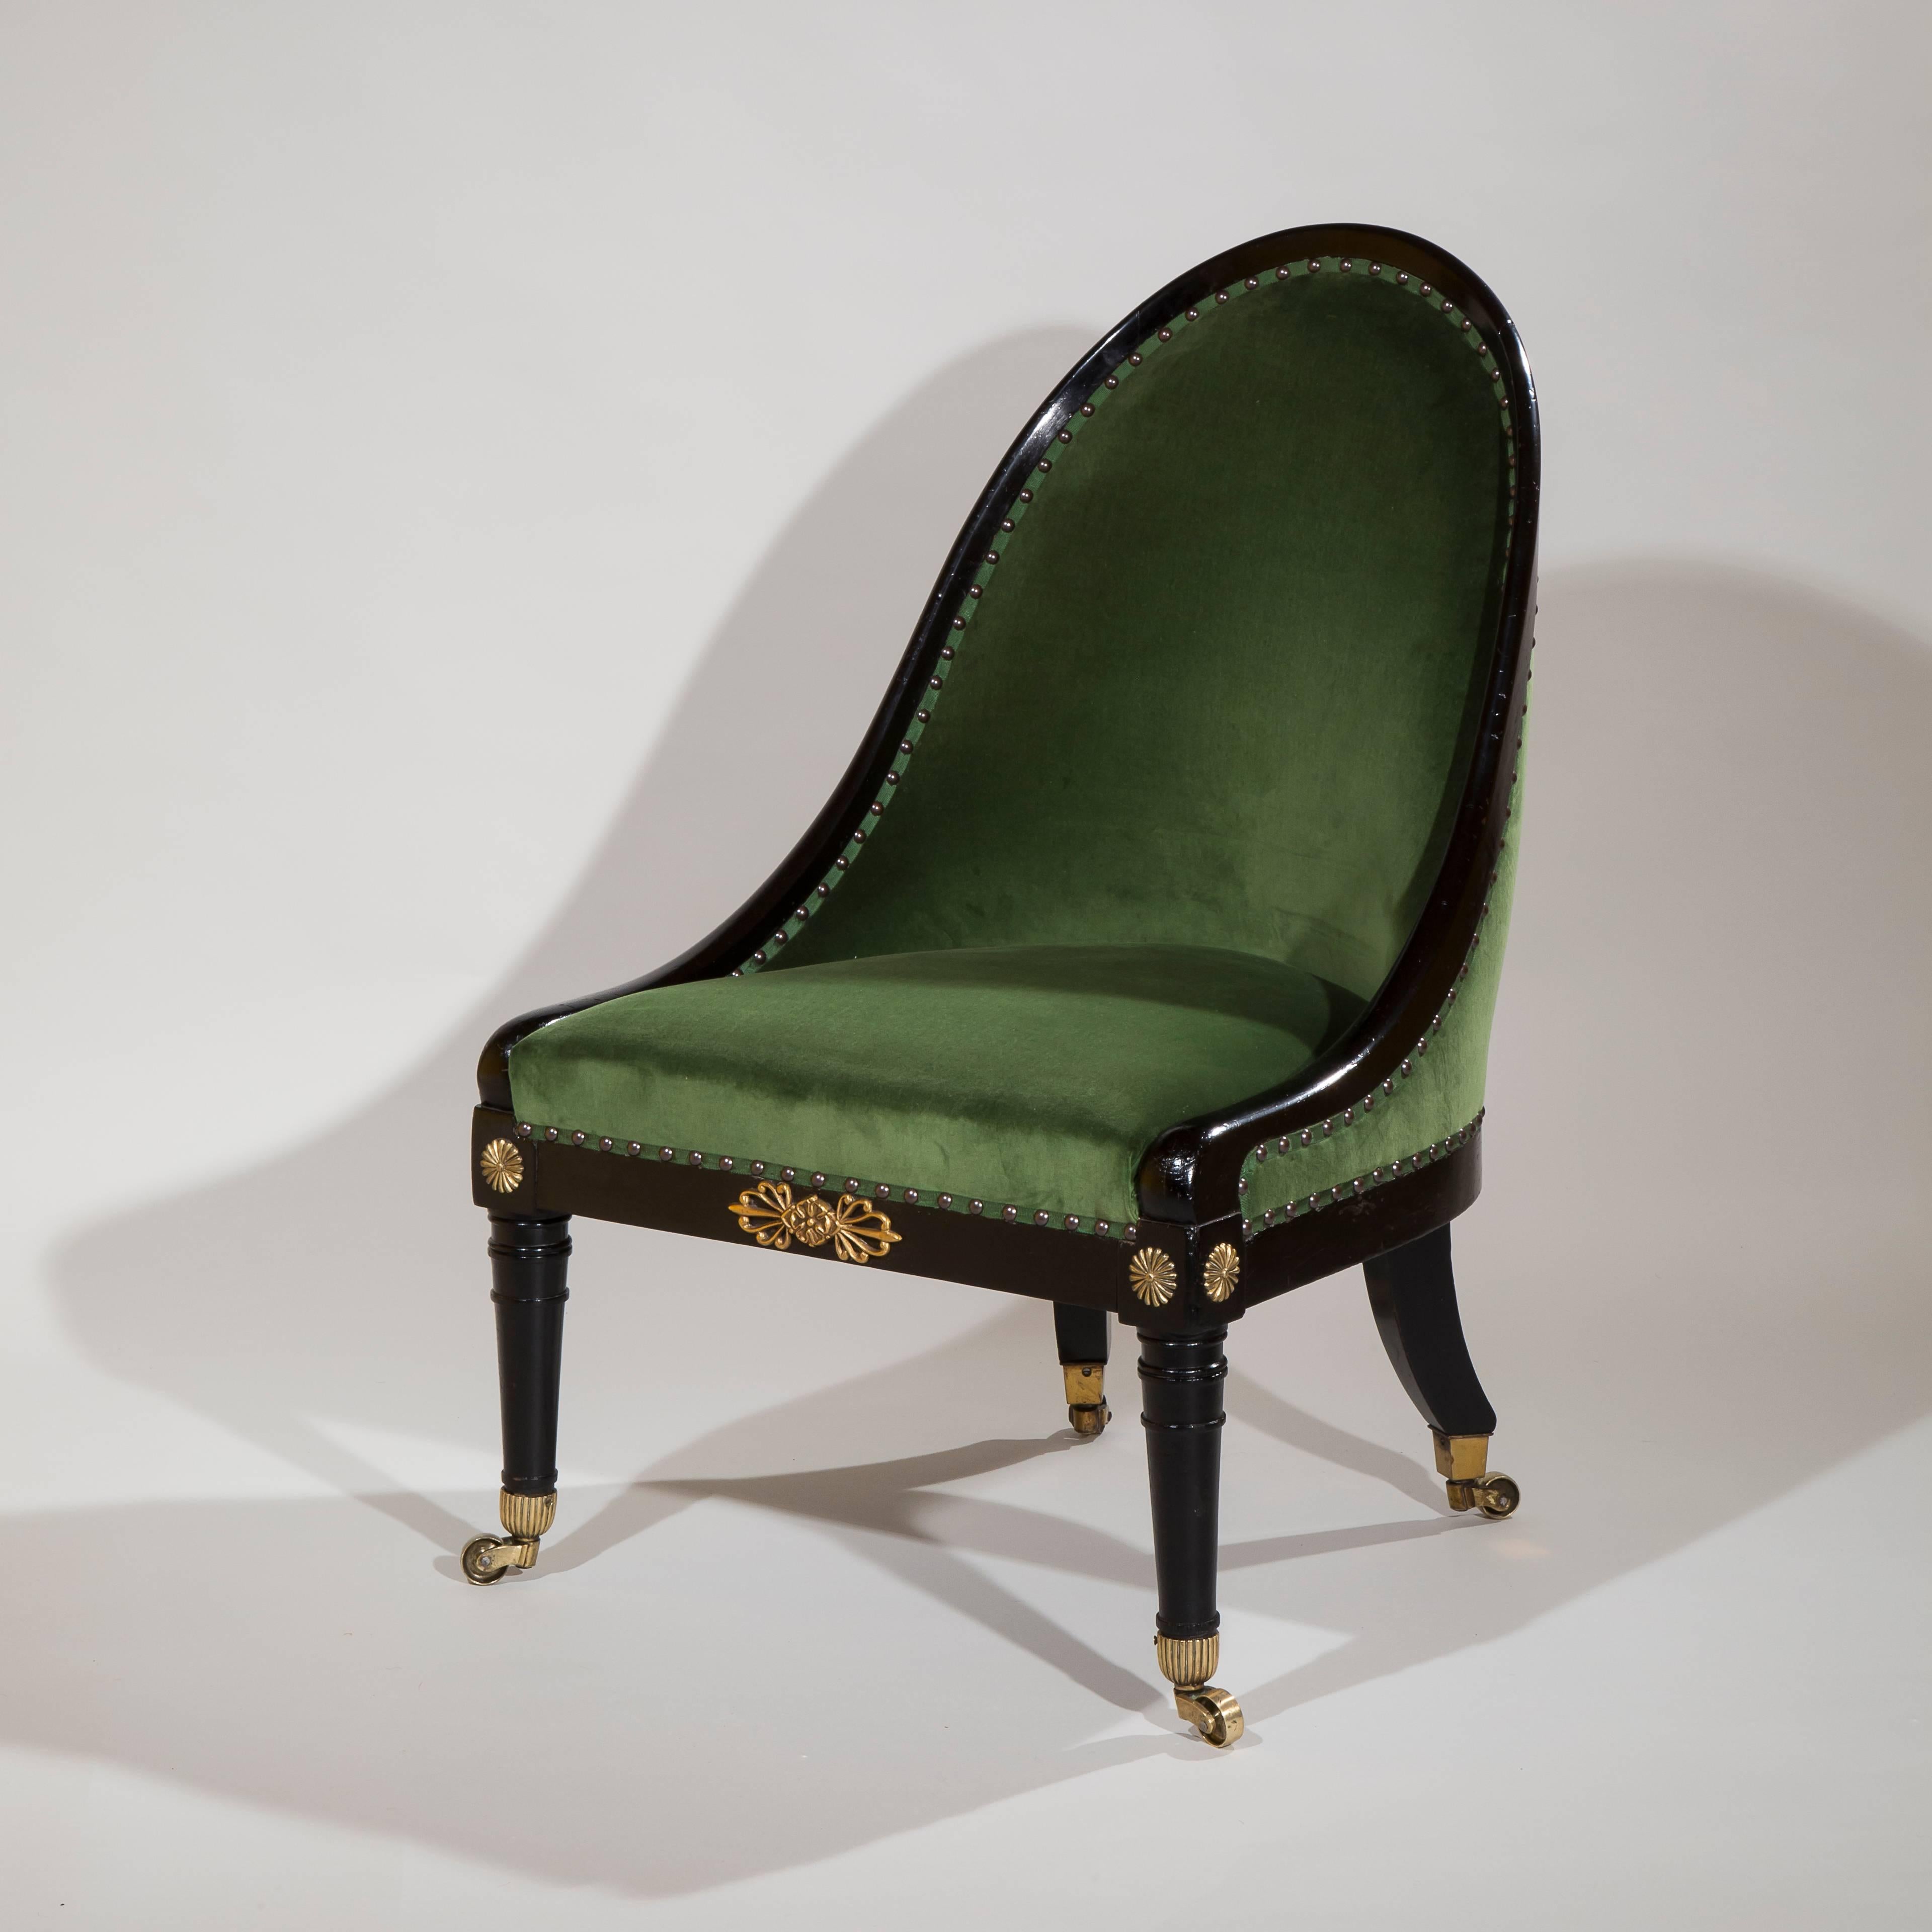 Painted Regency Slipper Chair of Spoon-Back Shape